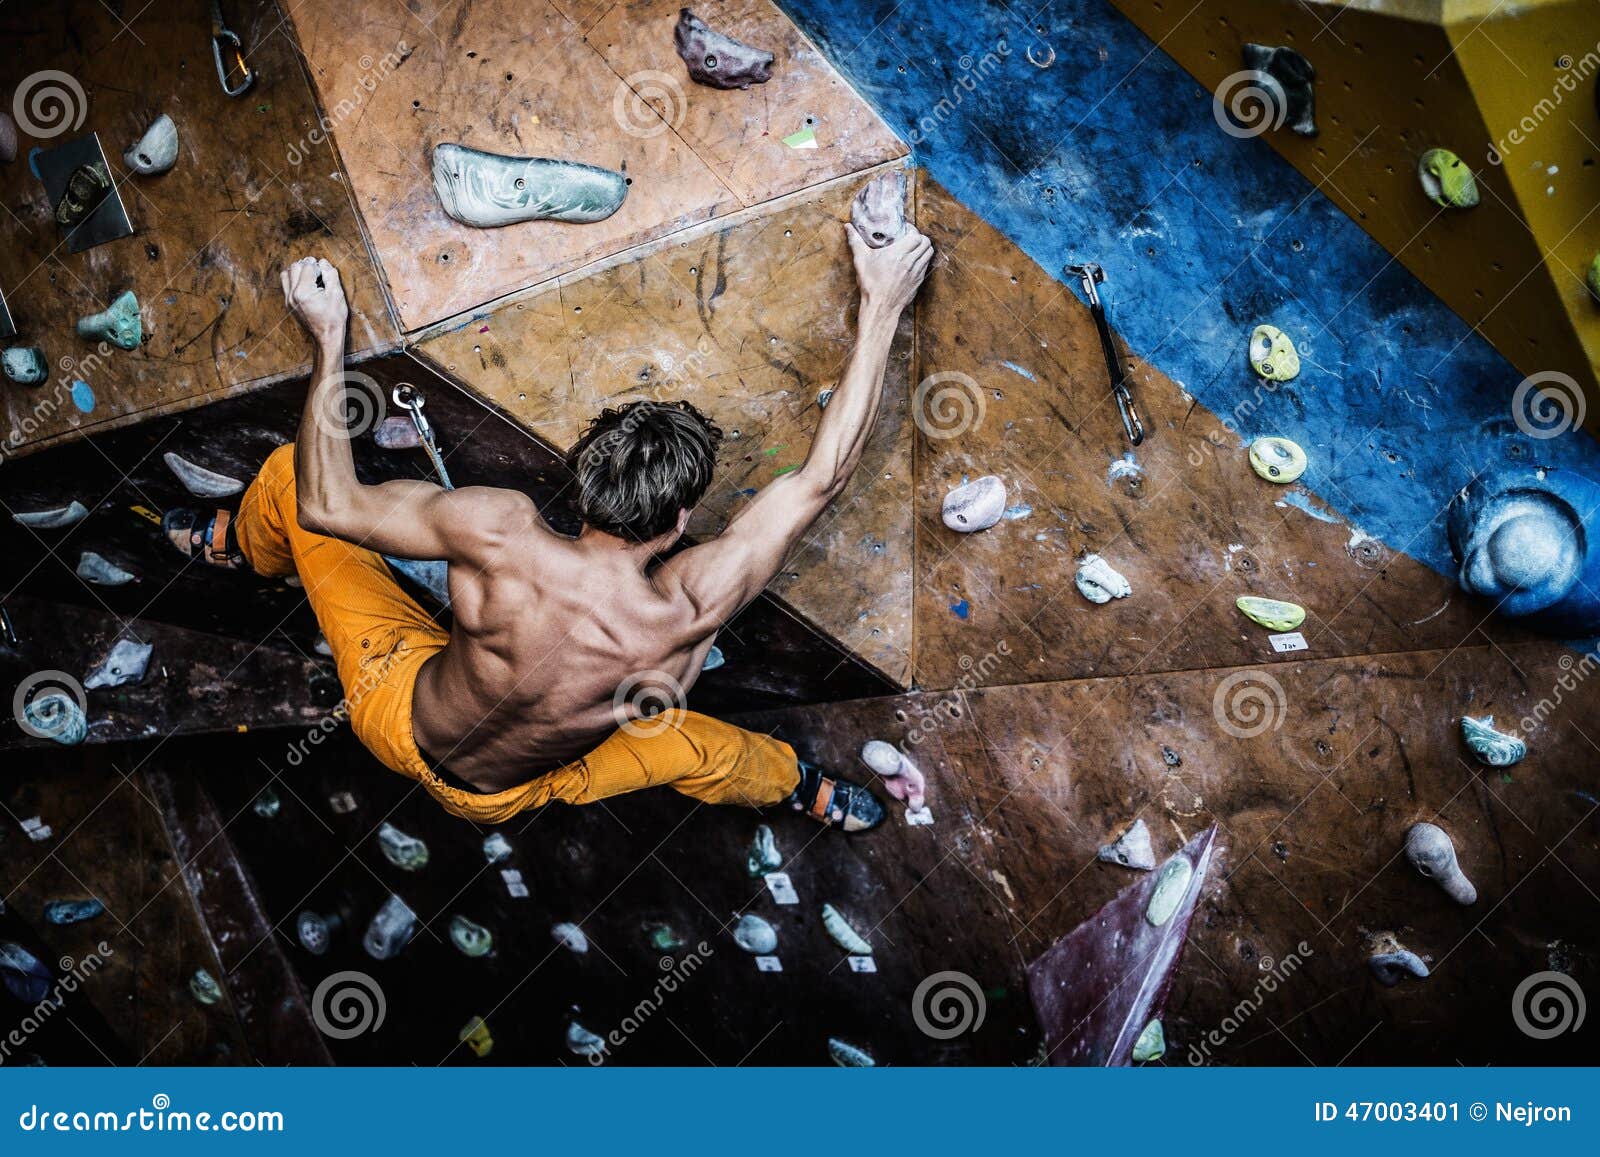 man practicing rock-climbing on a rock wall